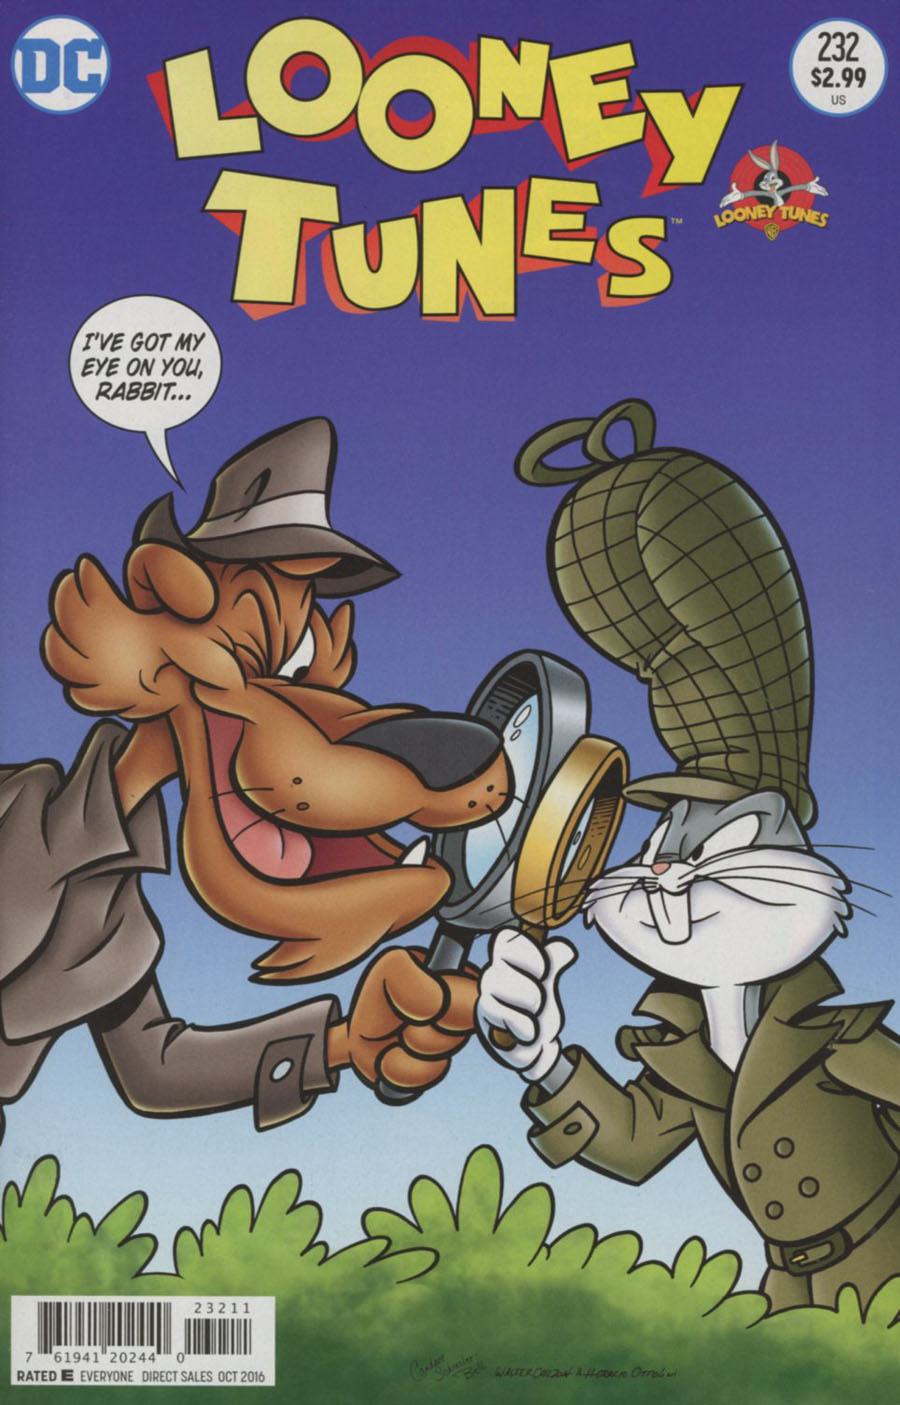 Looney Tunes Vol 3 #232